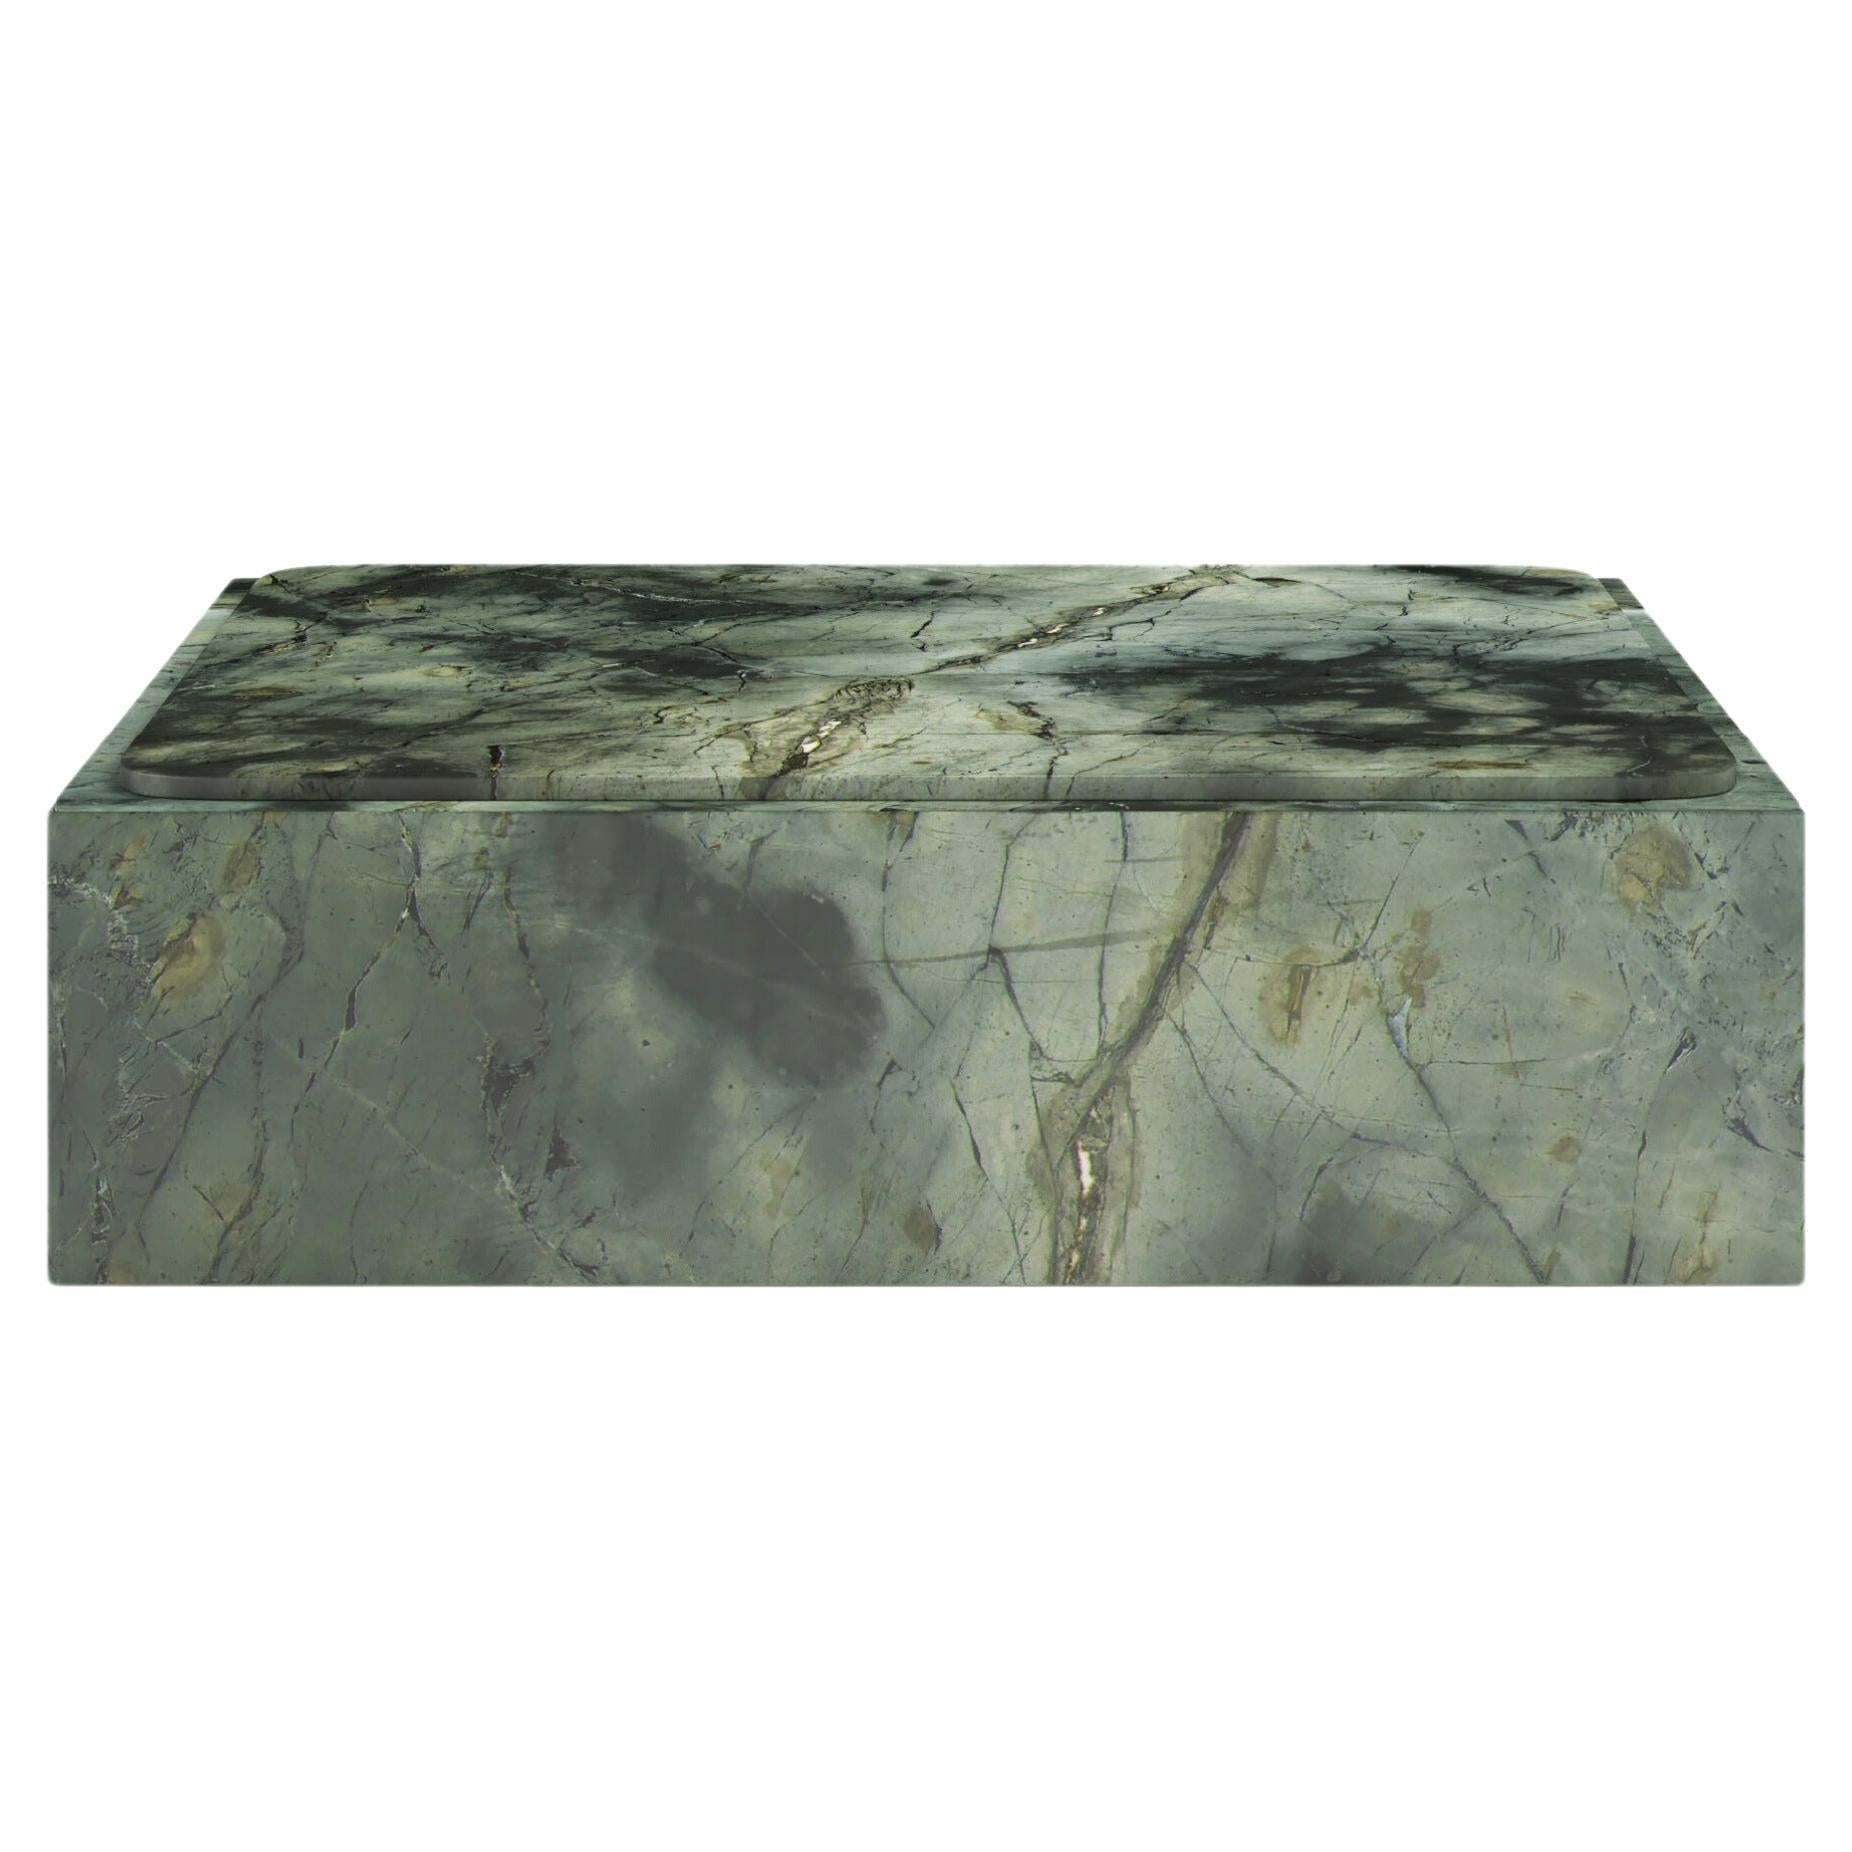 FORM(LA) Cubo Square Plinth Coffee Table 48”L x 48”W x 13”H Edinburgh Marble For Sale